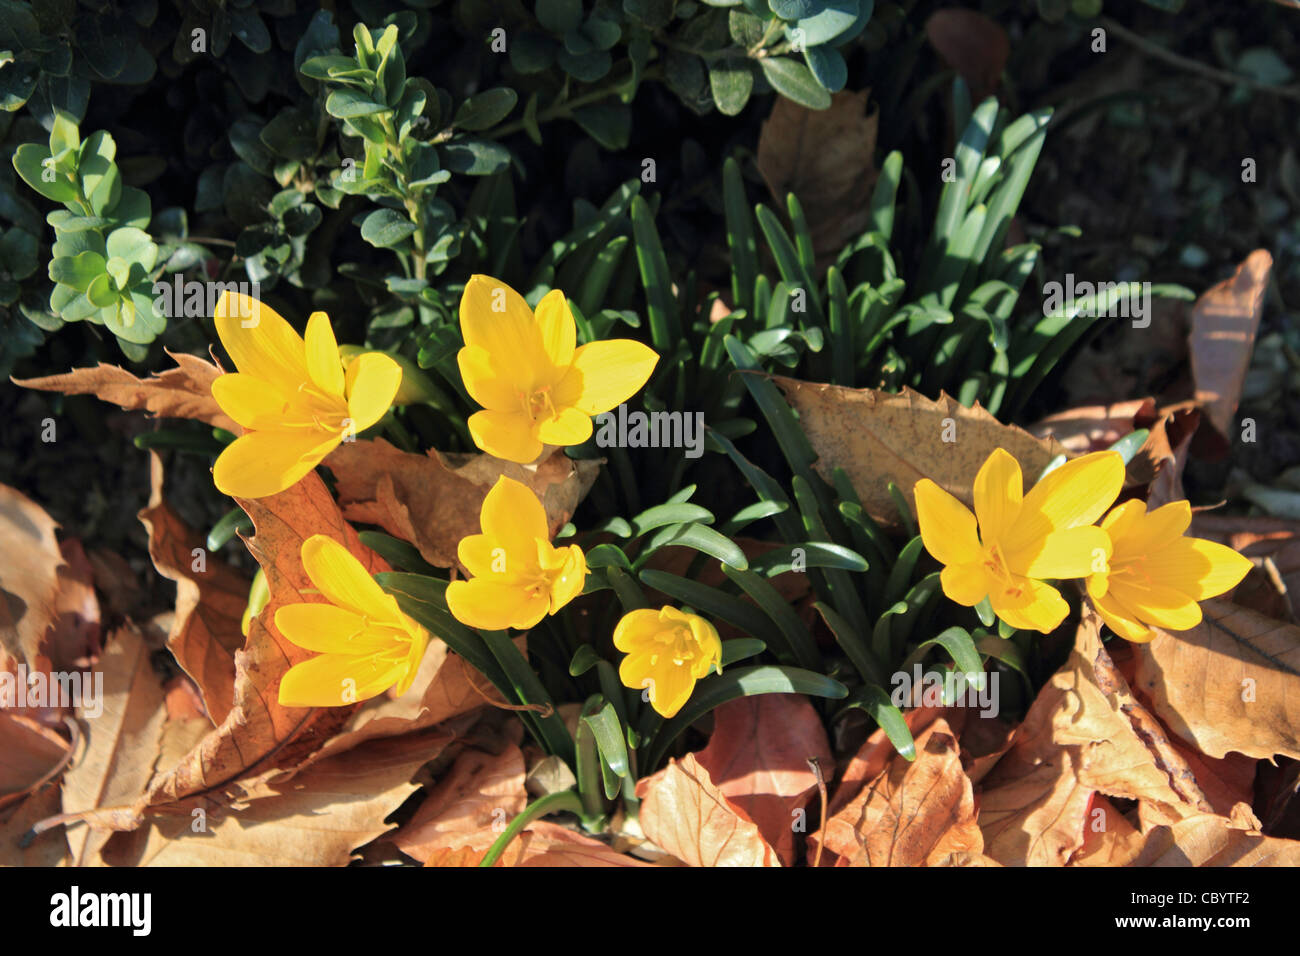 Yellow flowering Sternbergia lutea or Autumn crocus Stock Photo